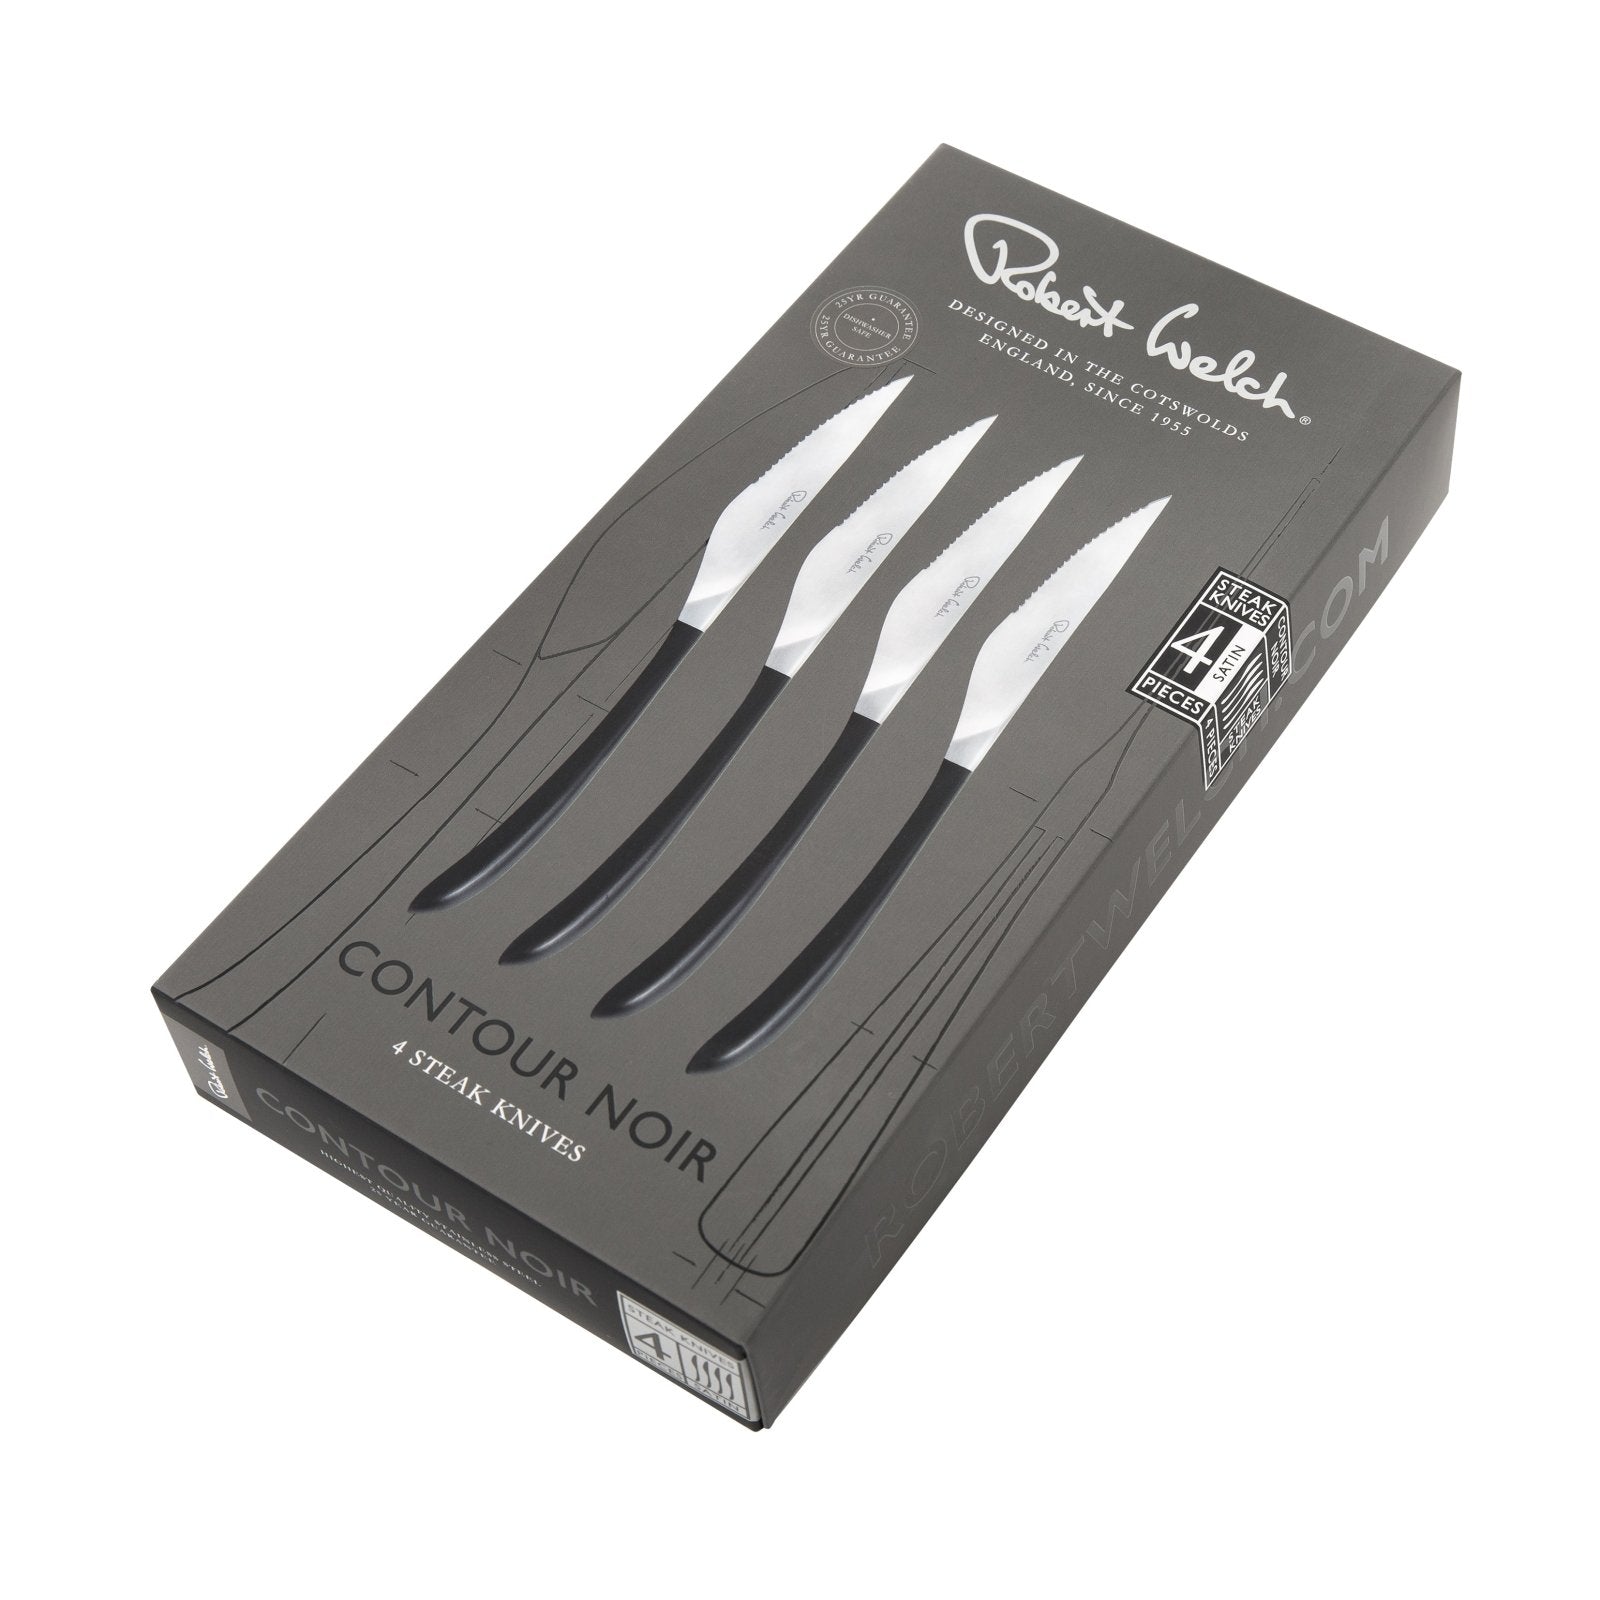 Robert Welch Contour Noir Black Steak Knife 4 Piece - COBSA1012V/4 - The Cotswold Knife Company